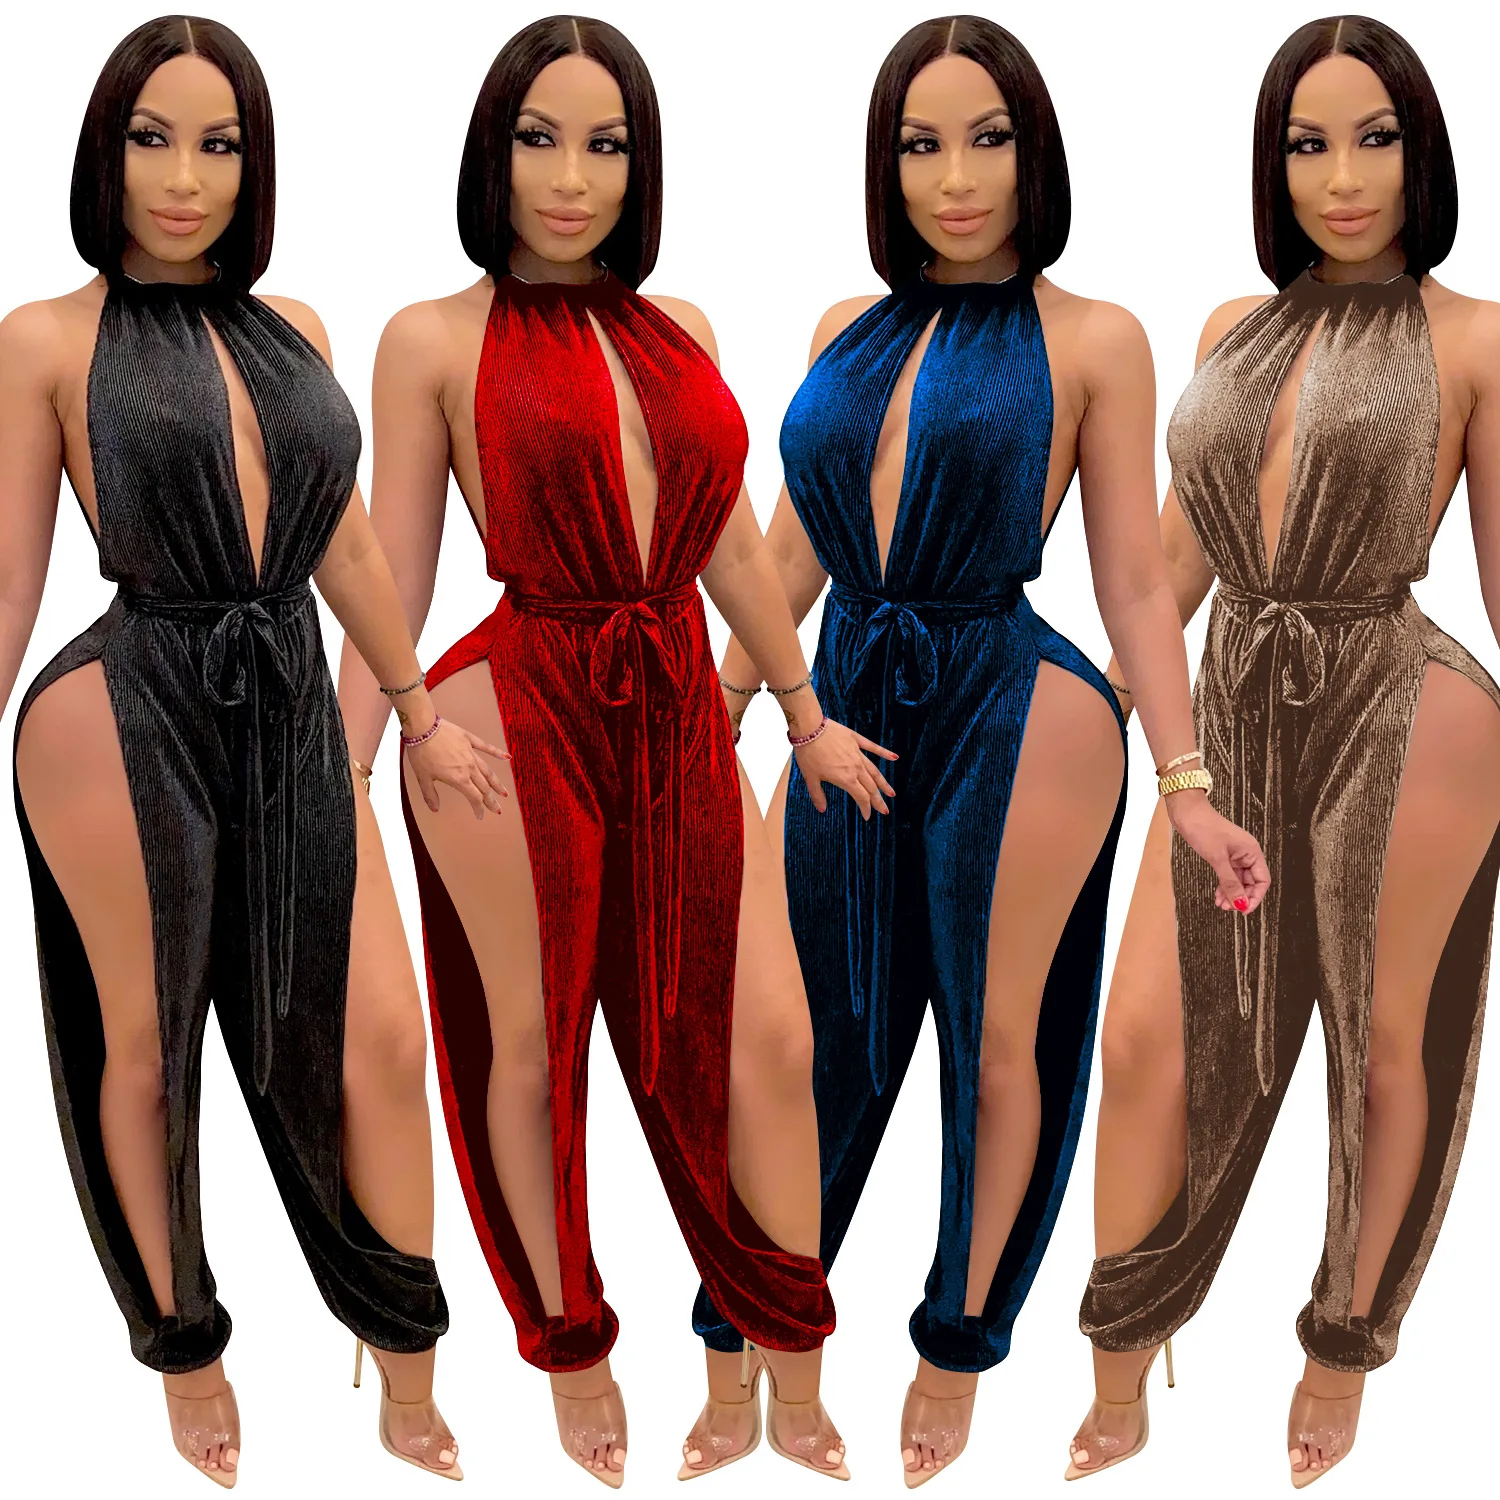 

B53910A New product women sexy slit fashion bandage nightclub jumpsuit, Red/brown/black/blue